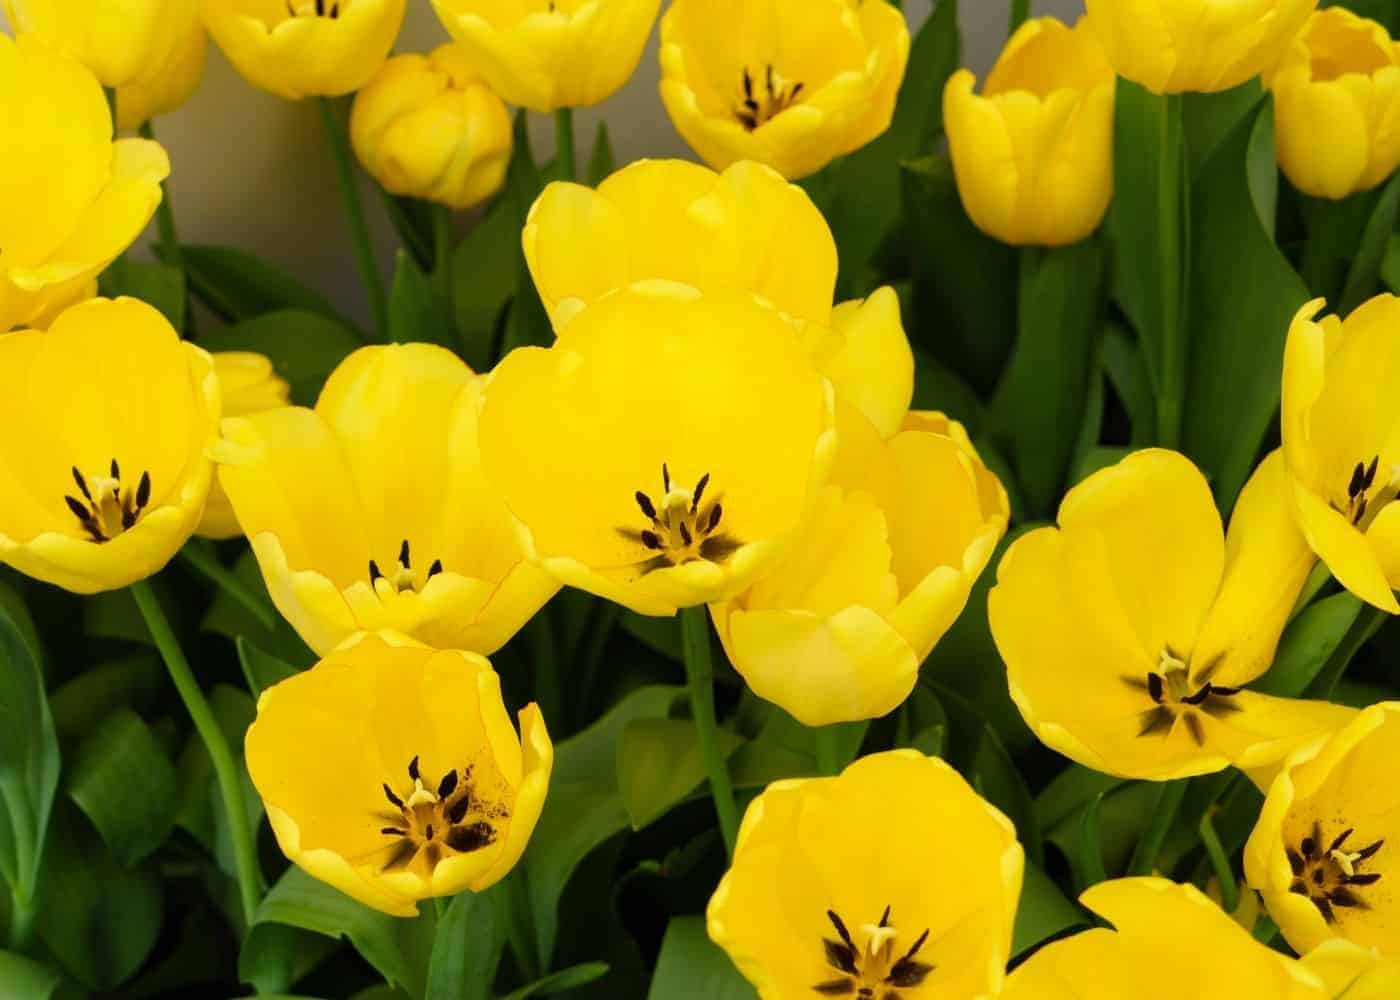 The golden parade tulip - yellow tulip variety